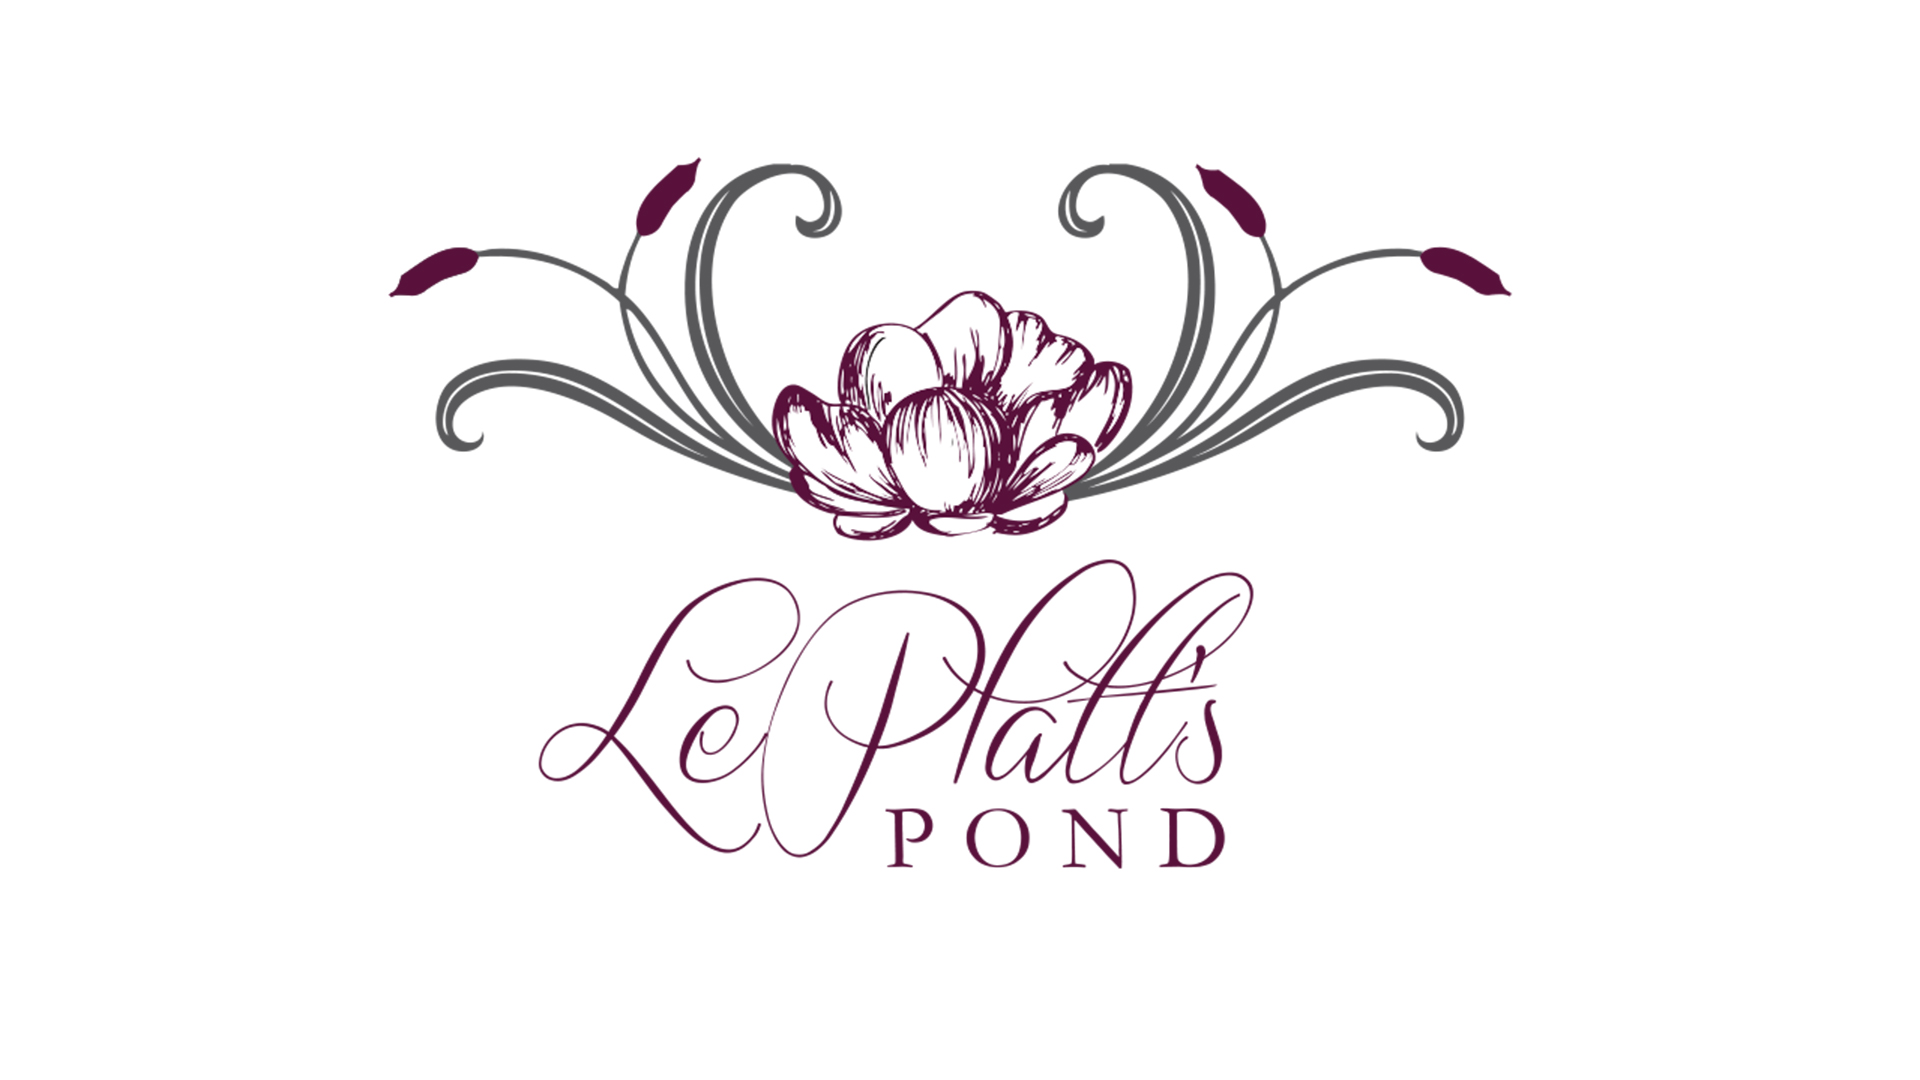 Best Colorado Wedding Venue - LePlatts Pond